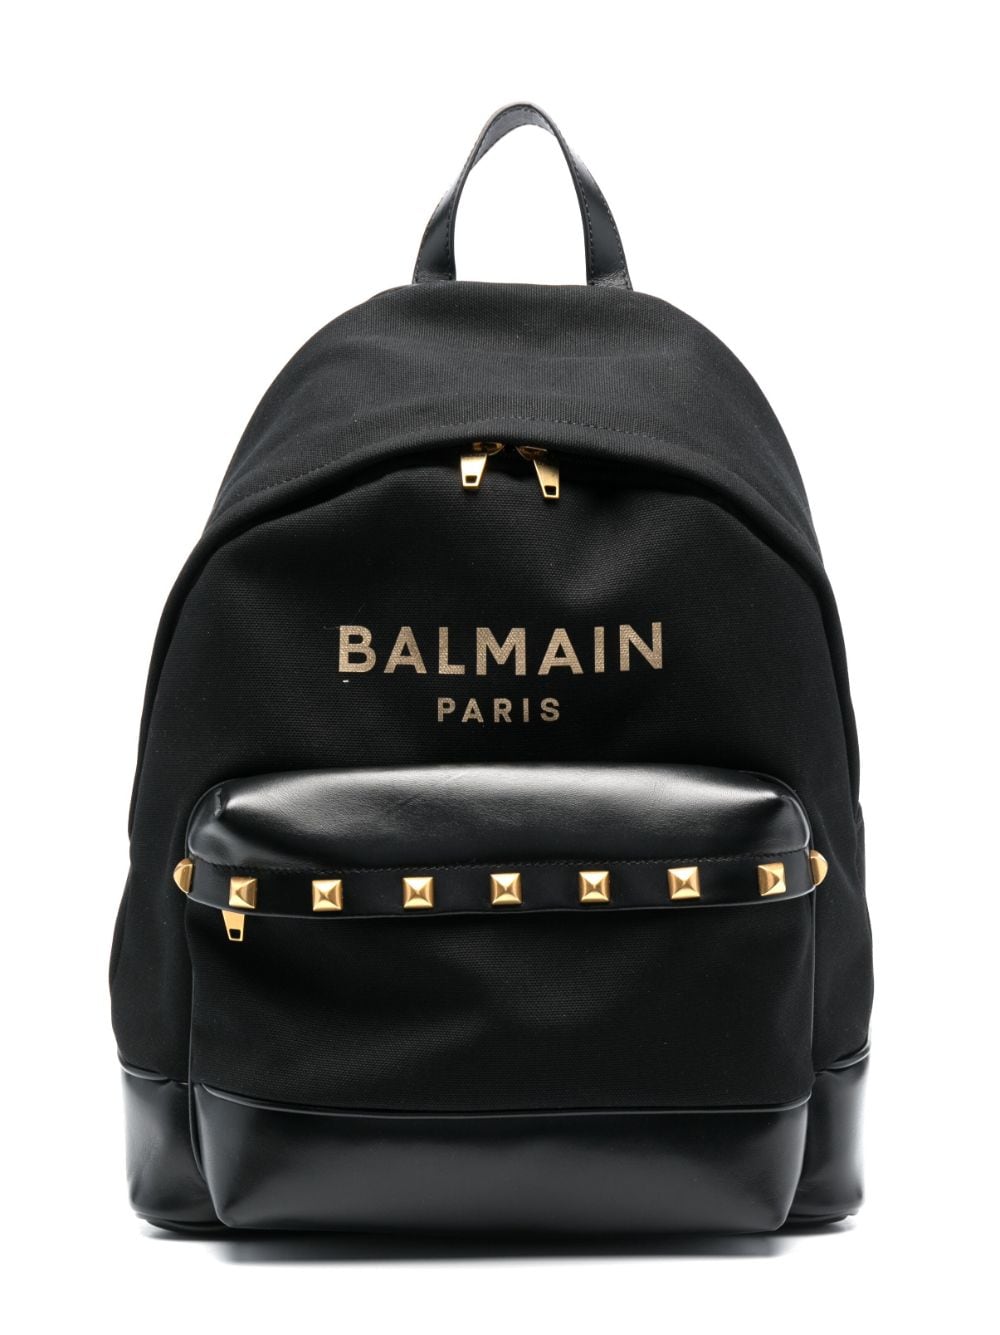 Black cotton canvas girl BALMAIN backpack